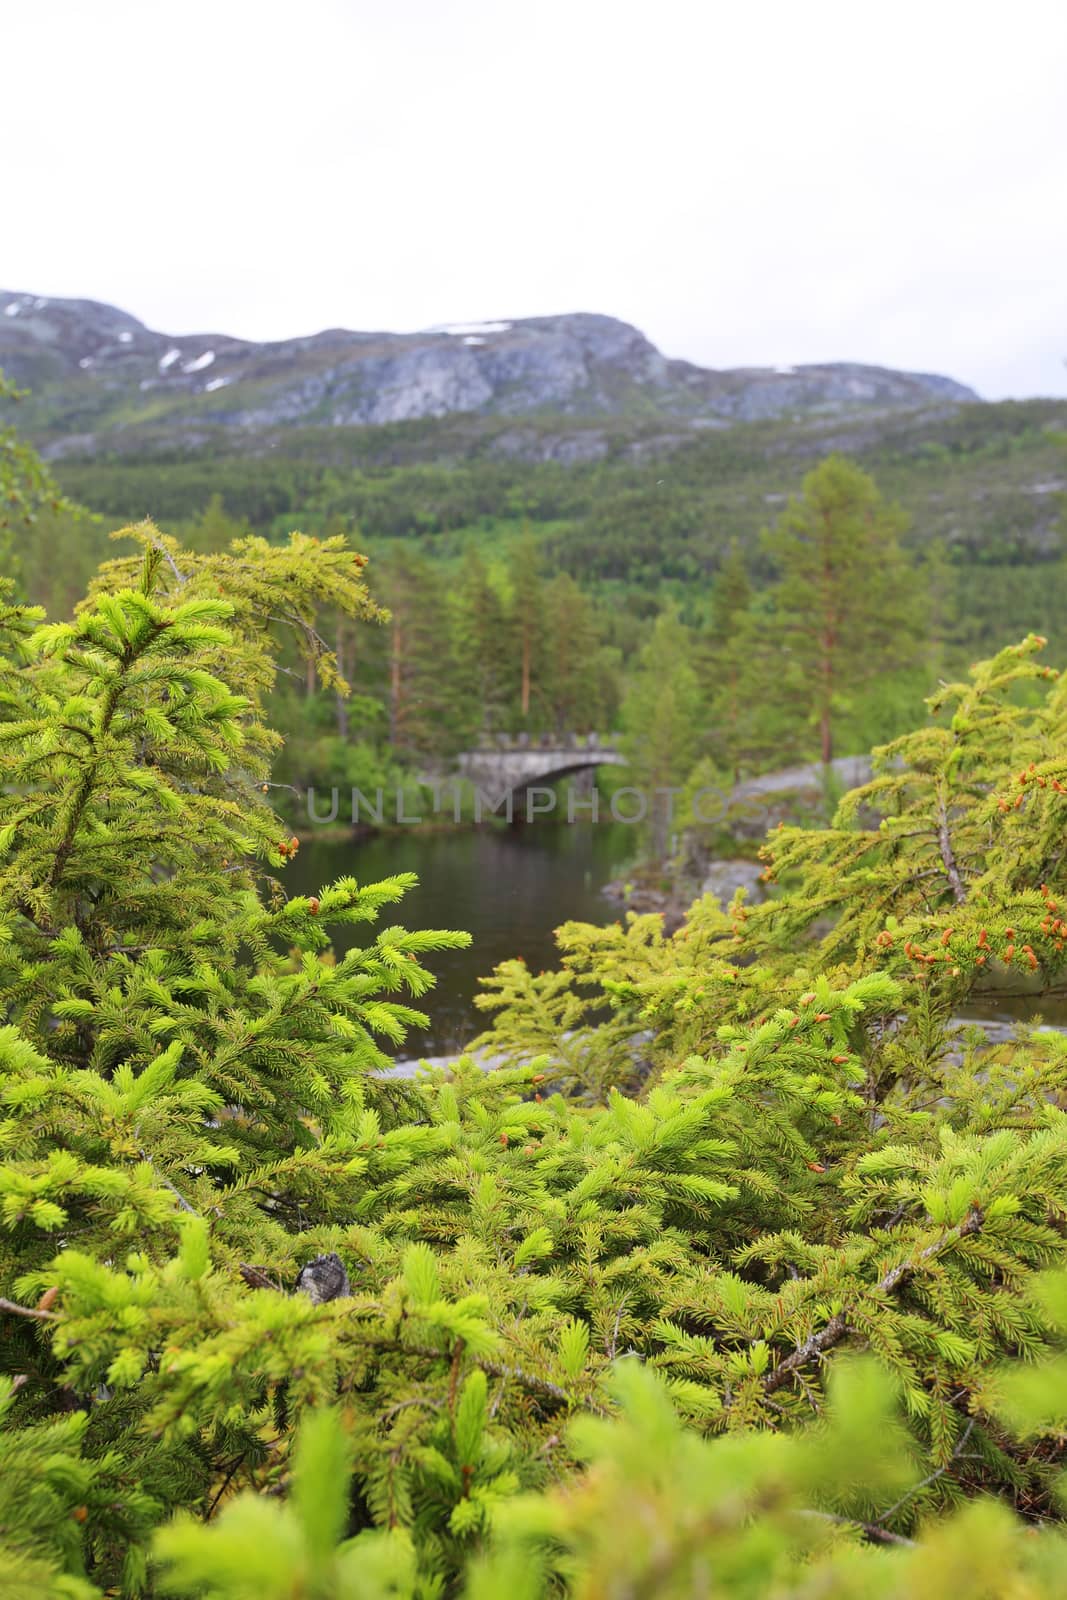 Tinnsja lake, Norway by destillat